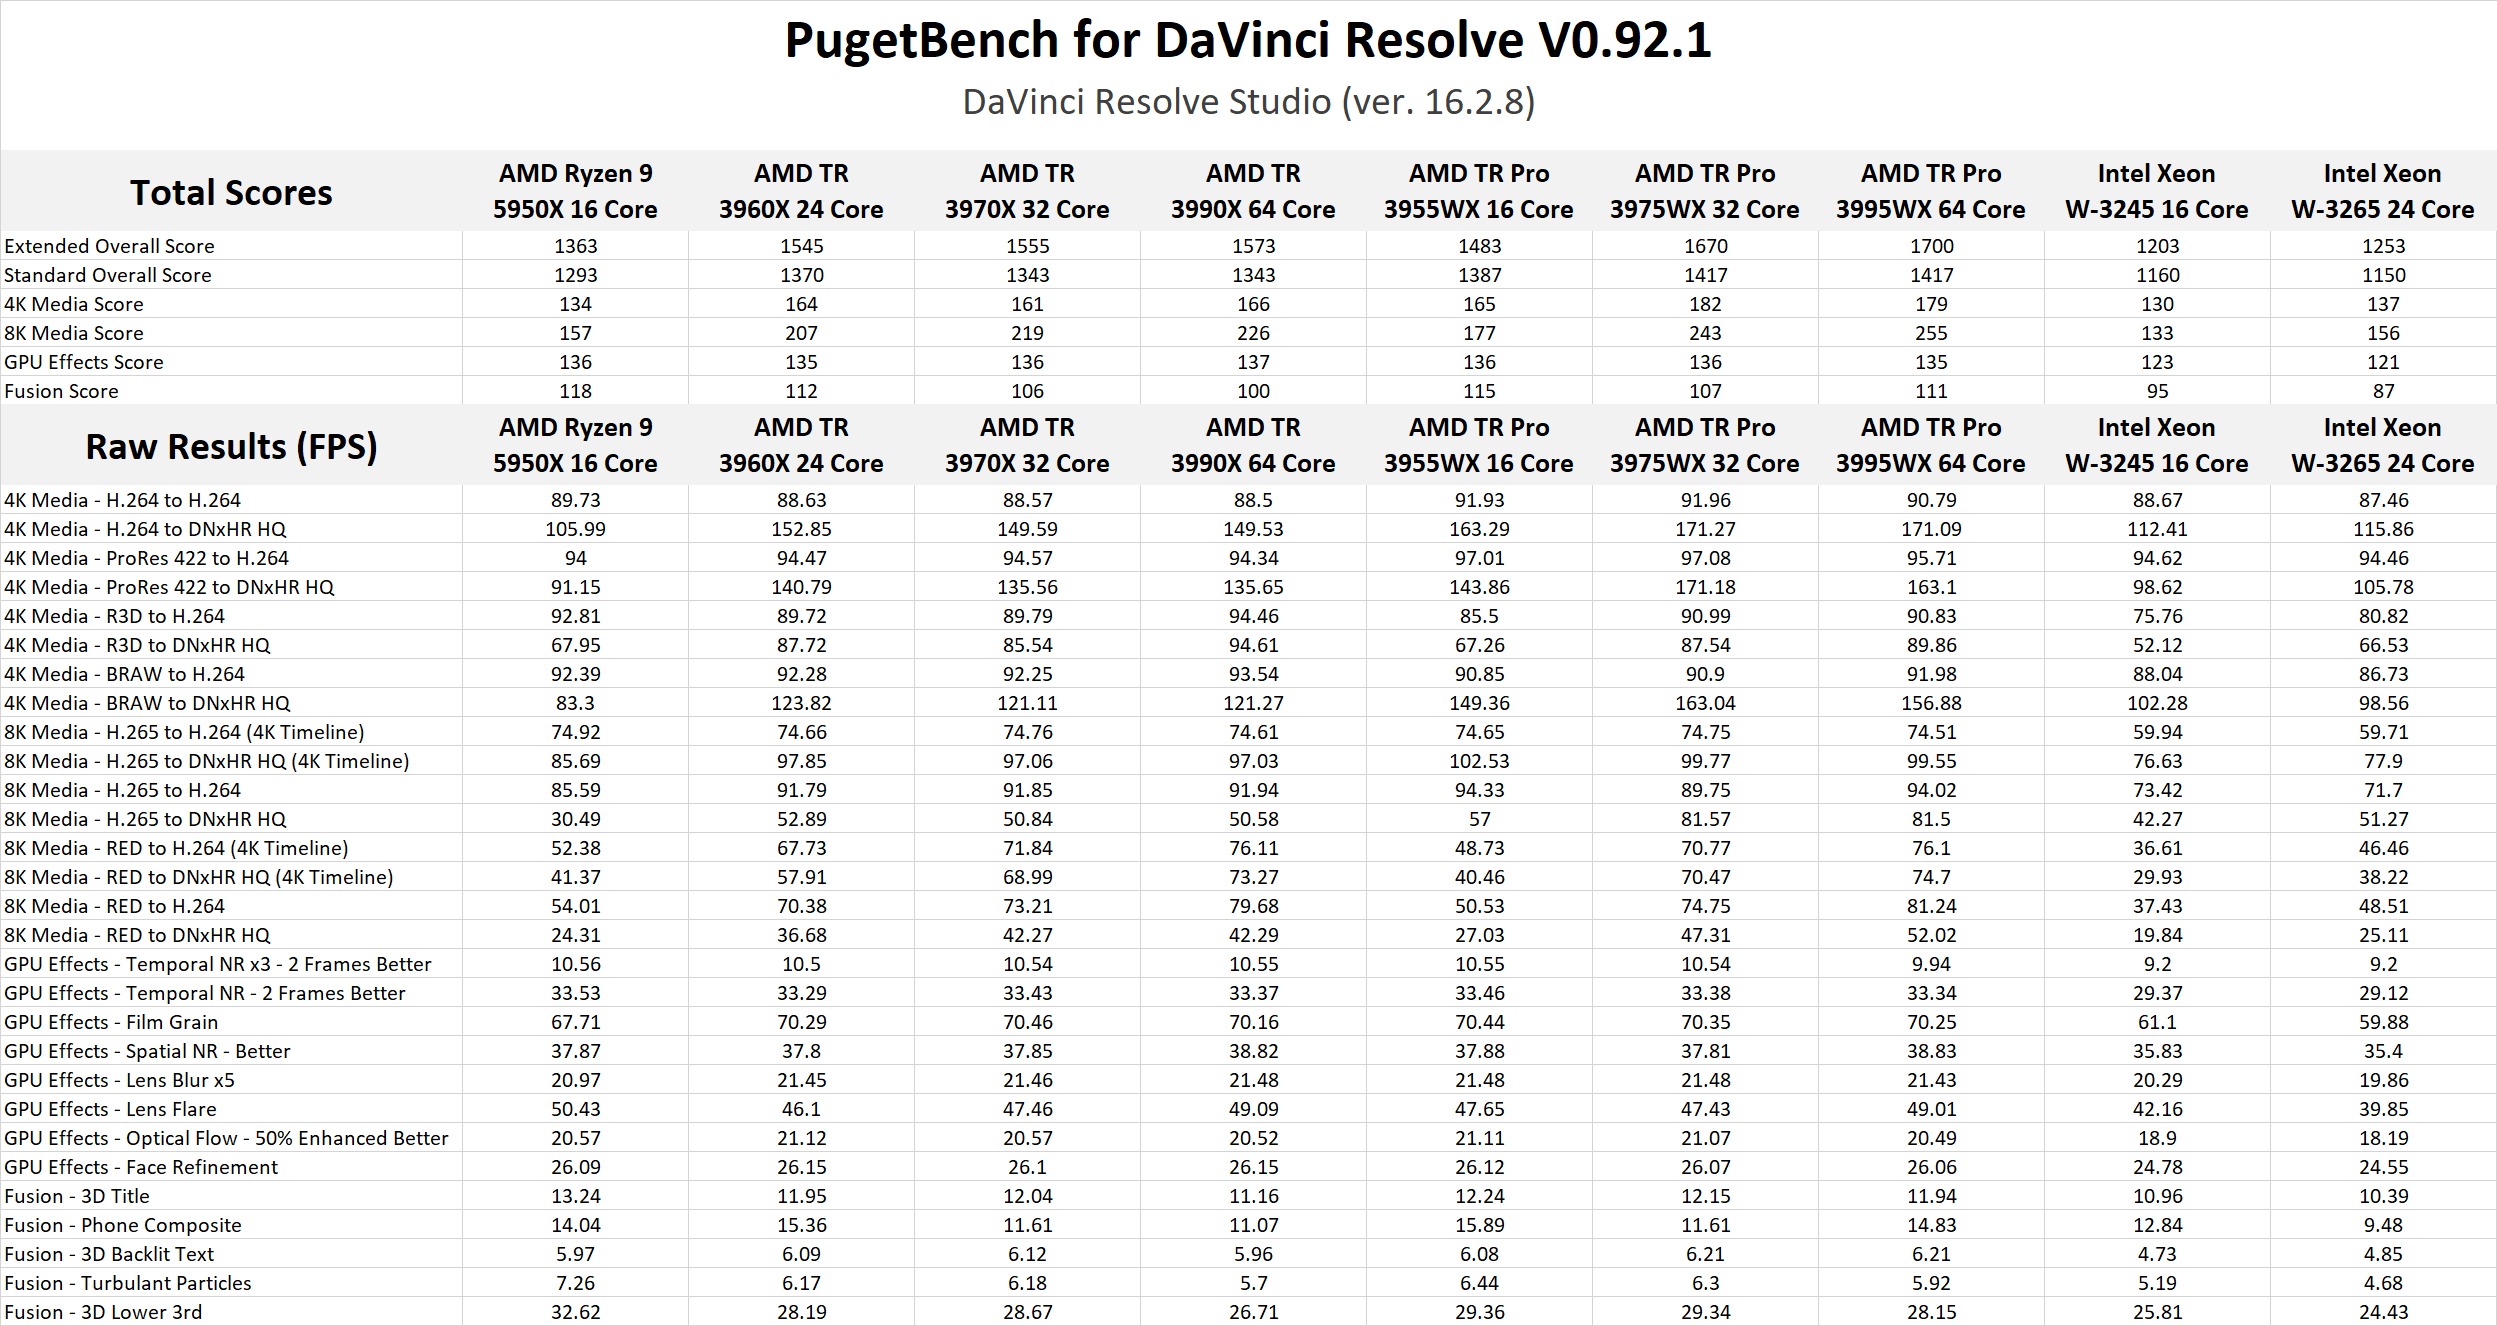 AMD Ryzen Threadripper PRO 3000 Series DaVinci Resolve Studio Benchmark Results